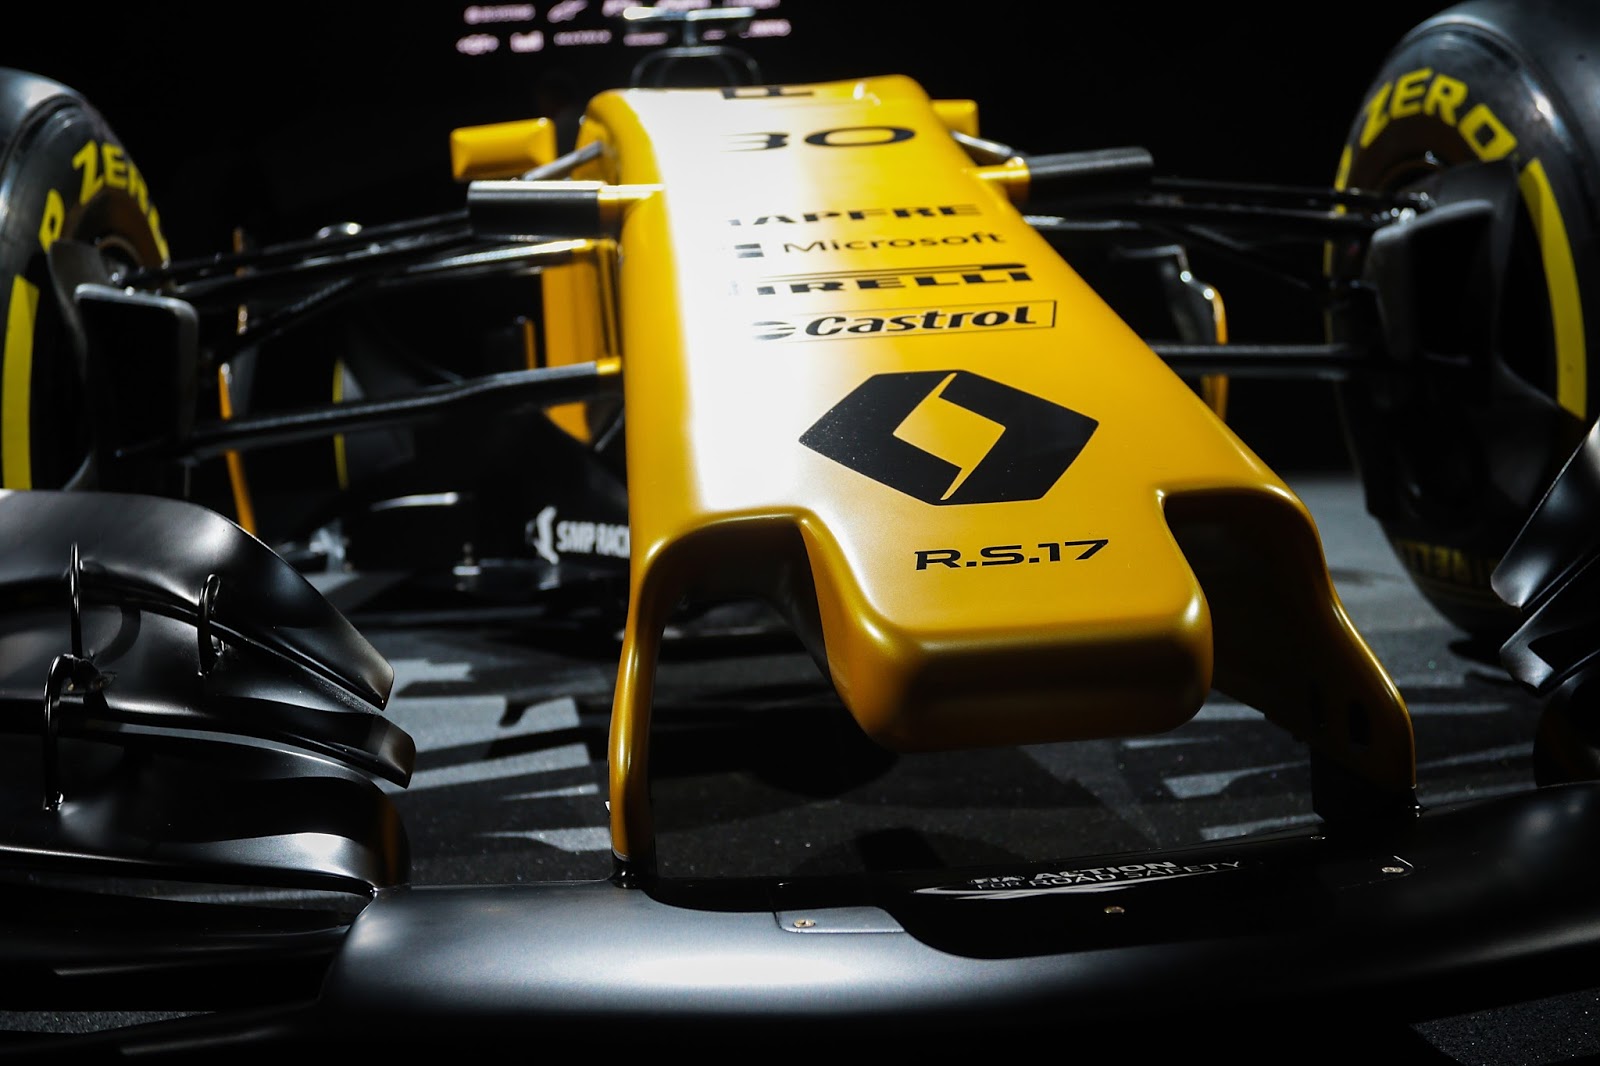 20170221153343 272d4793 Η Renault Sport παρουσίασε το καινούργιο της μονοθέσιο, την R.S.17